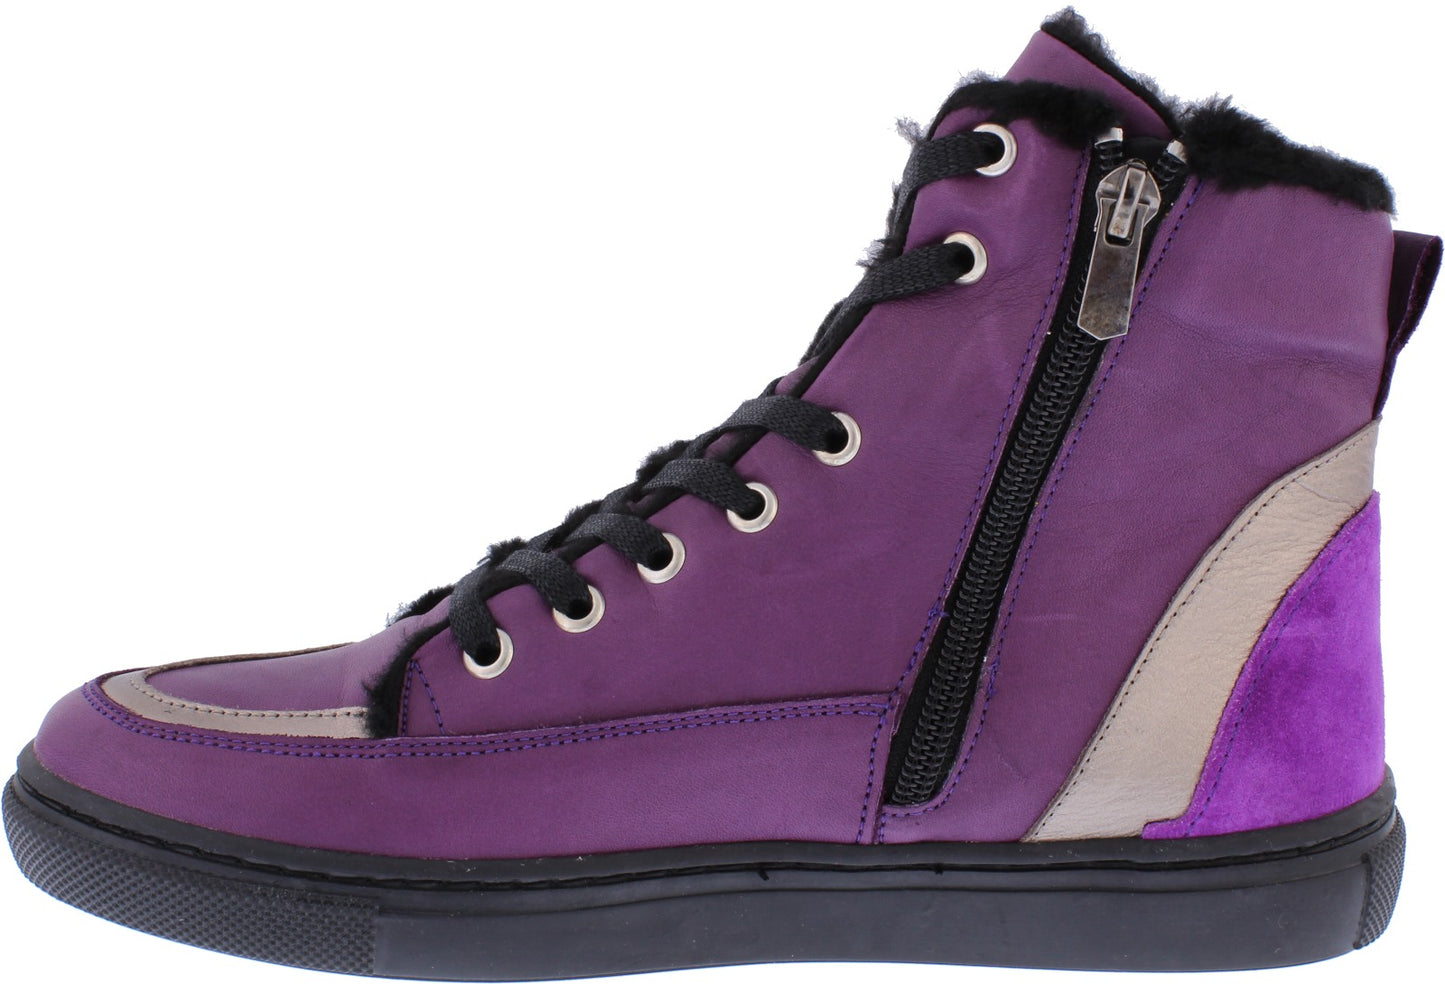 adesso ladies boots imogen purple sizes uk 2 to 8 sale £54.99